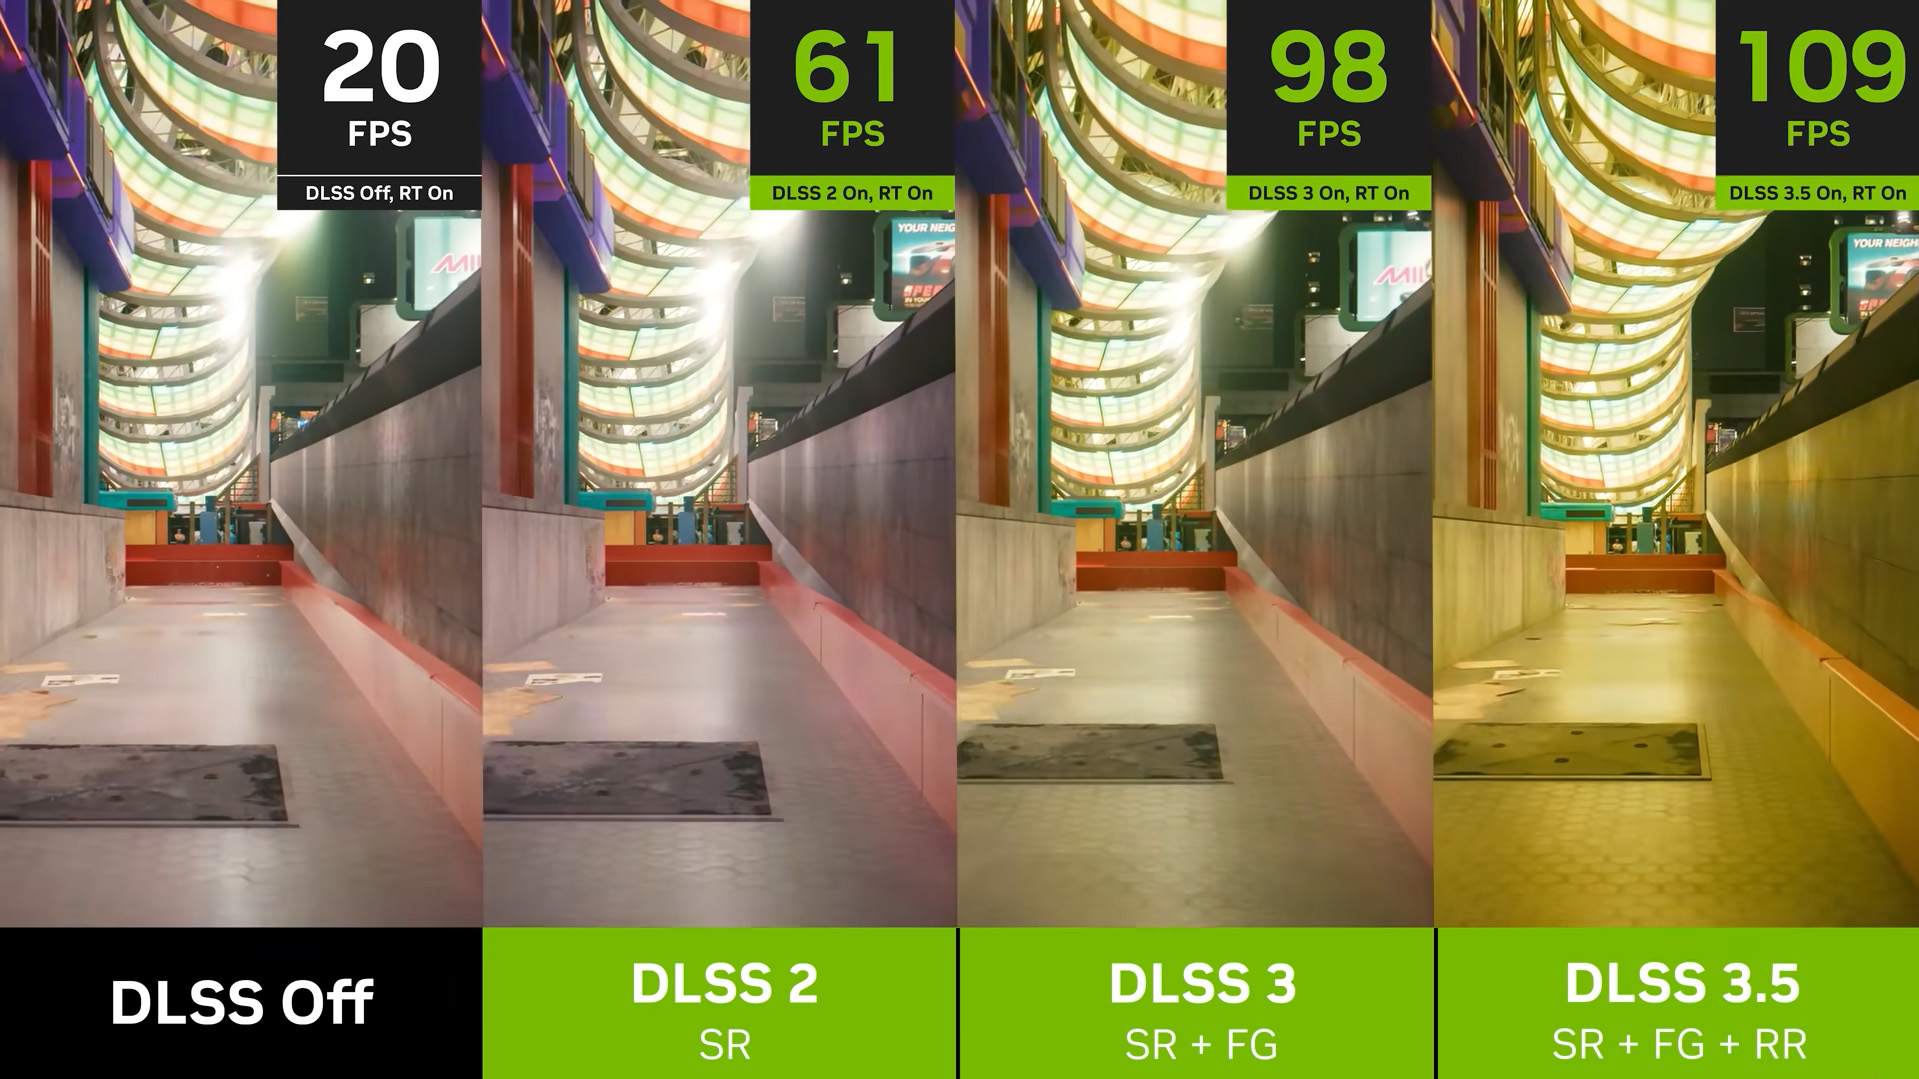 Nvidia's demonstration of DLSS 3.5 performance using Cyberpunk 2077